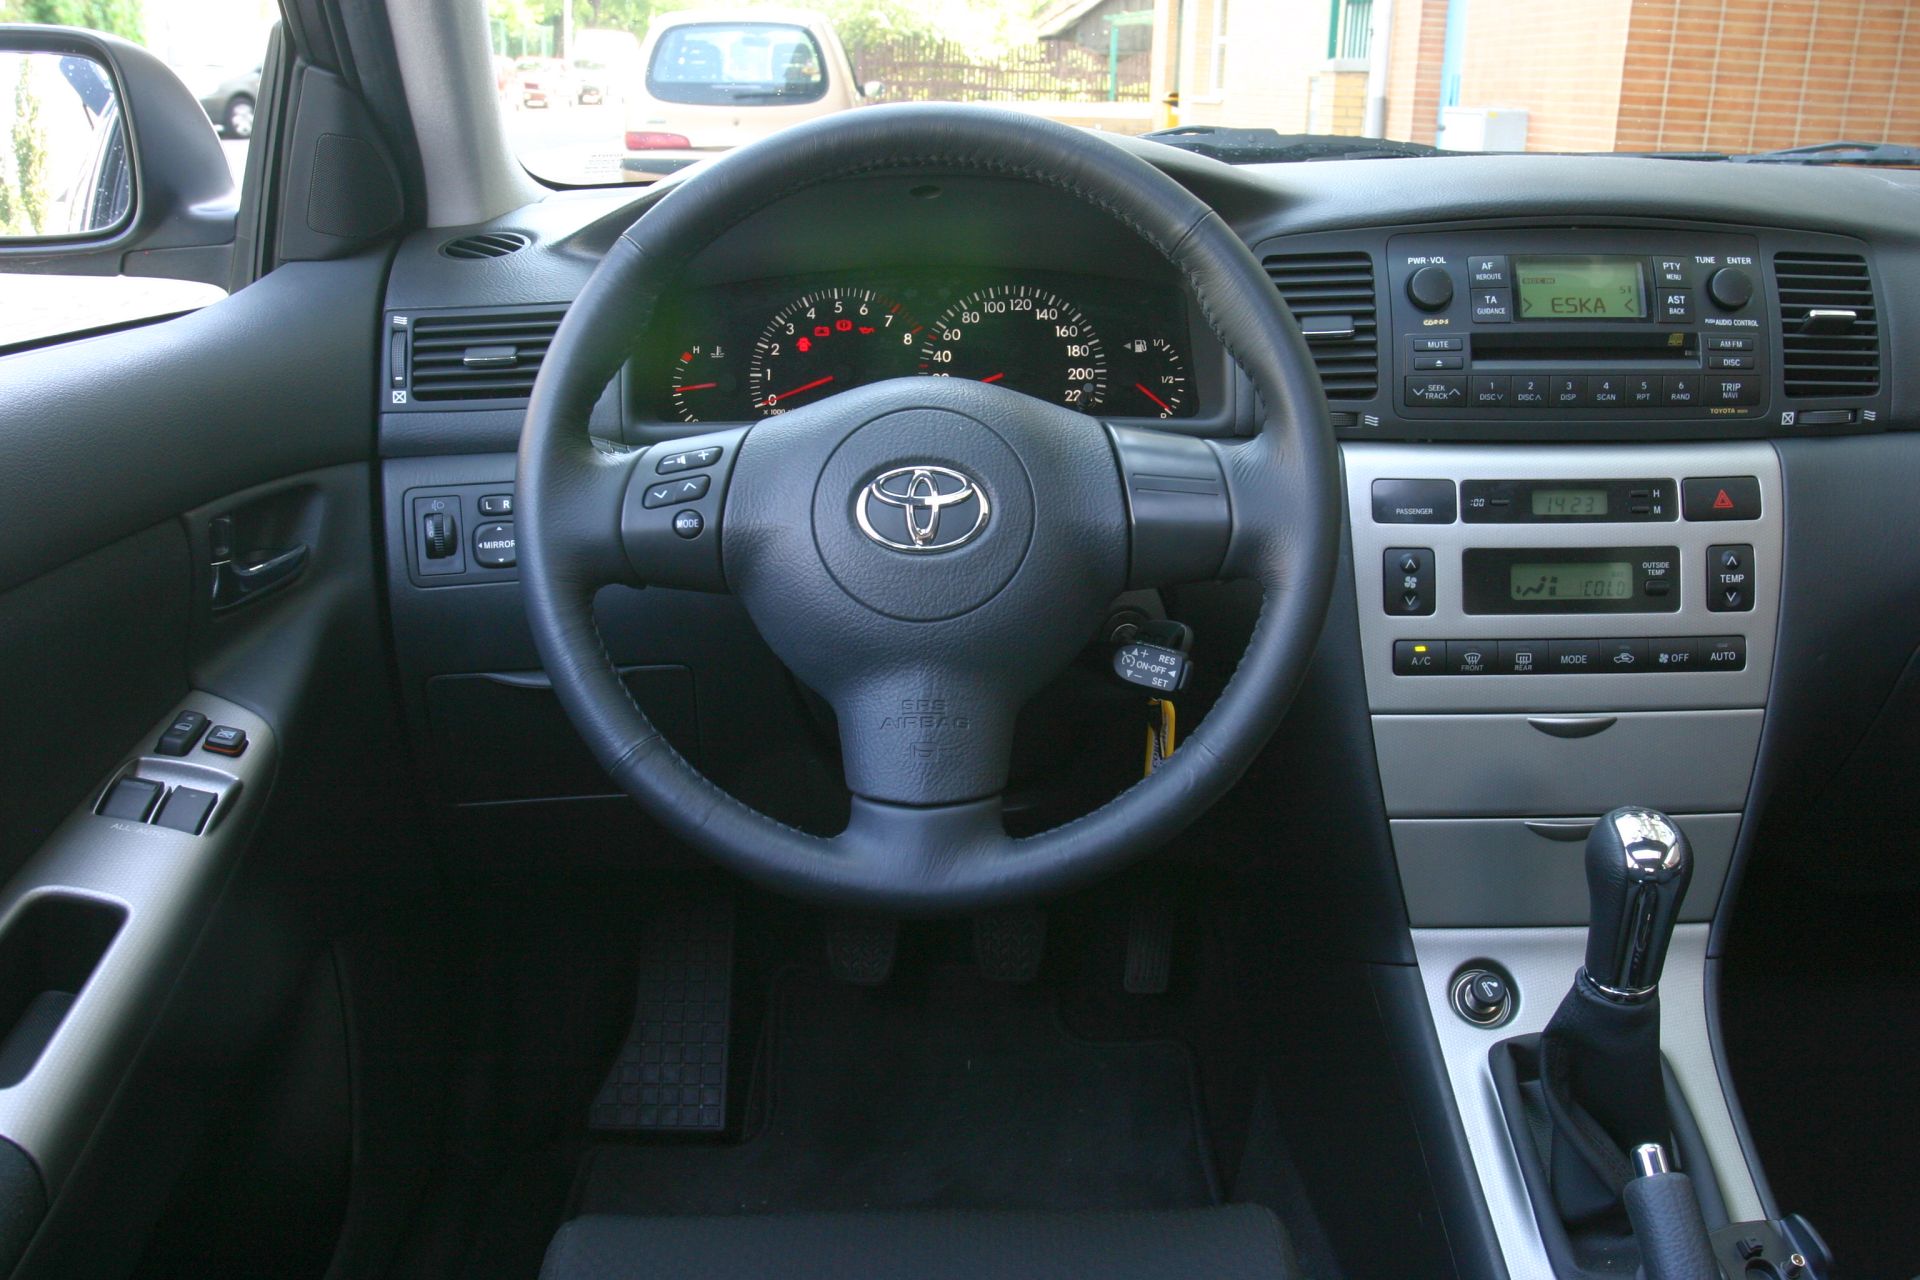 Toyota Corolla IX kokpit przedlift